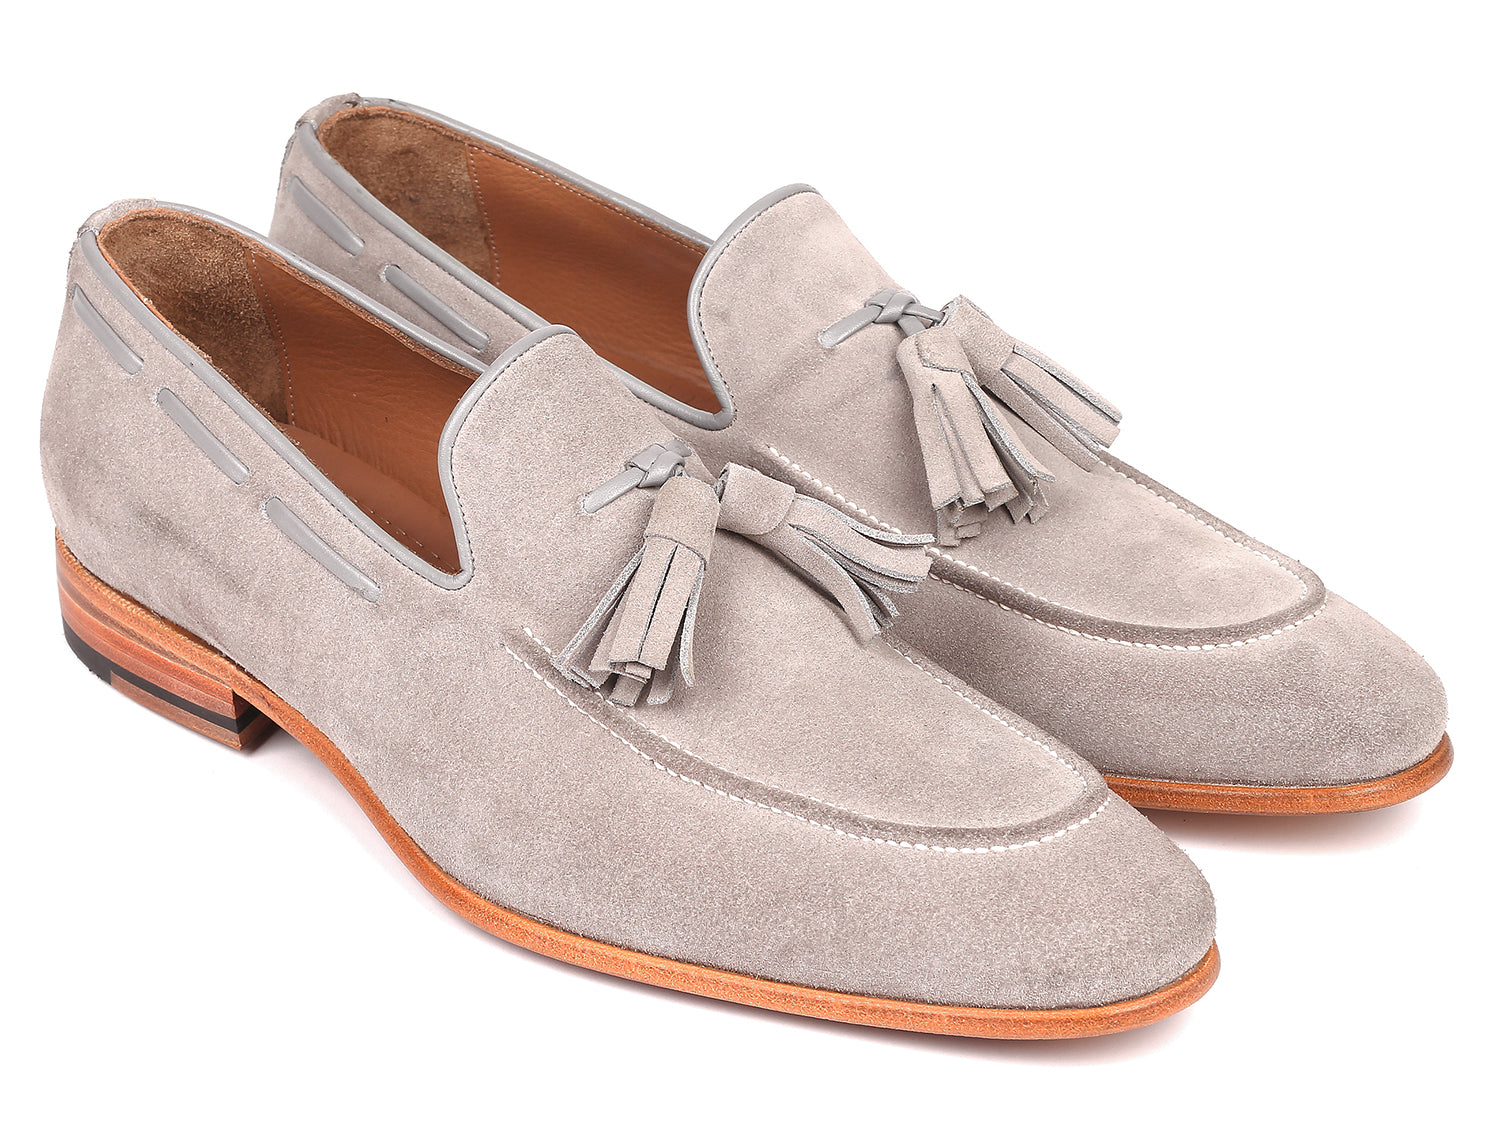 Vandre sikkerhed Diplomat Paul Parkman Men's Tassel Loafers Grey Suede (ID#GRY32FG) – PAUL PARKMAN®  Handmade Shoes